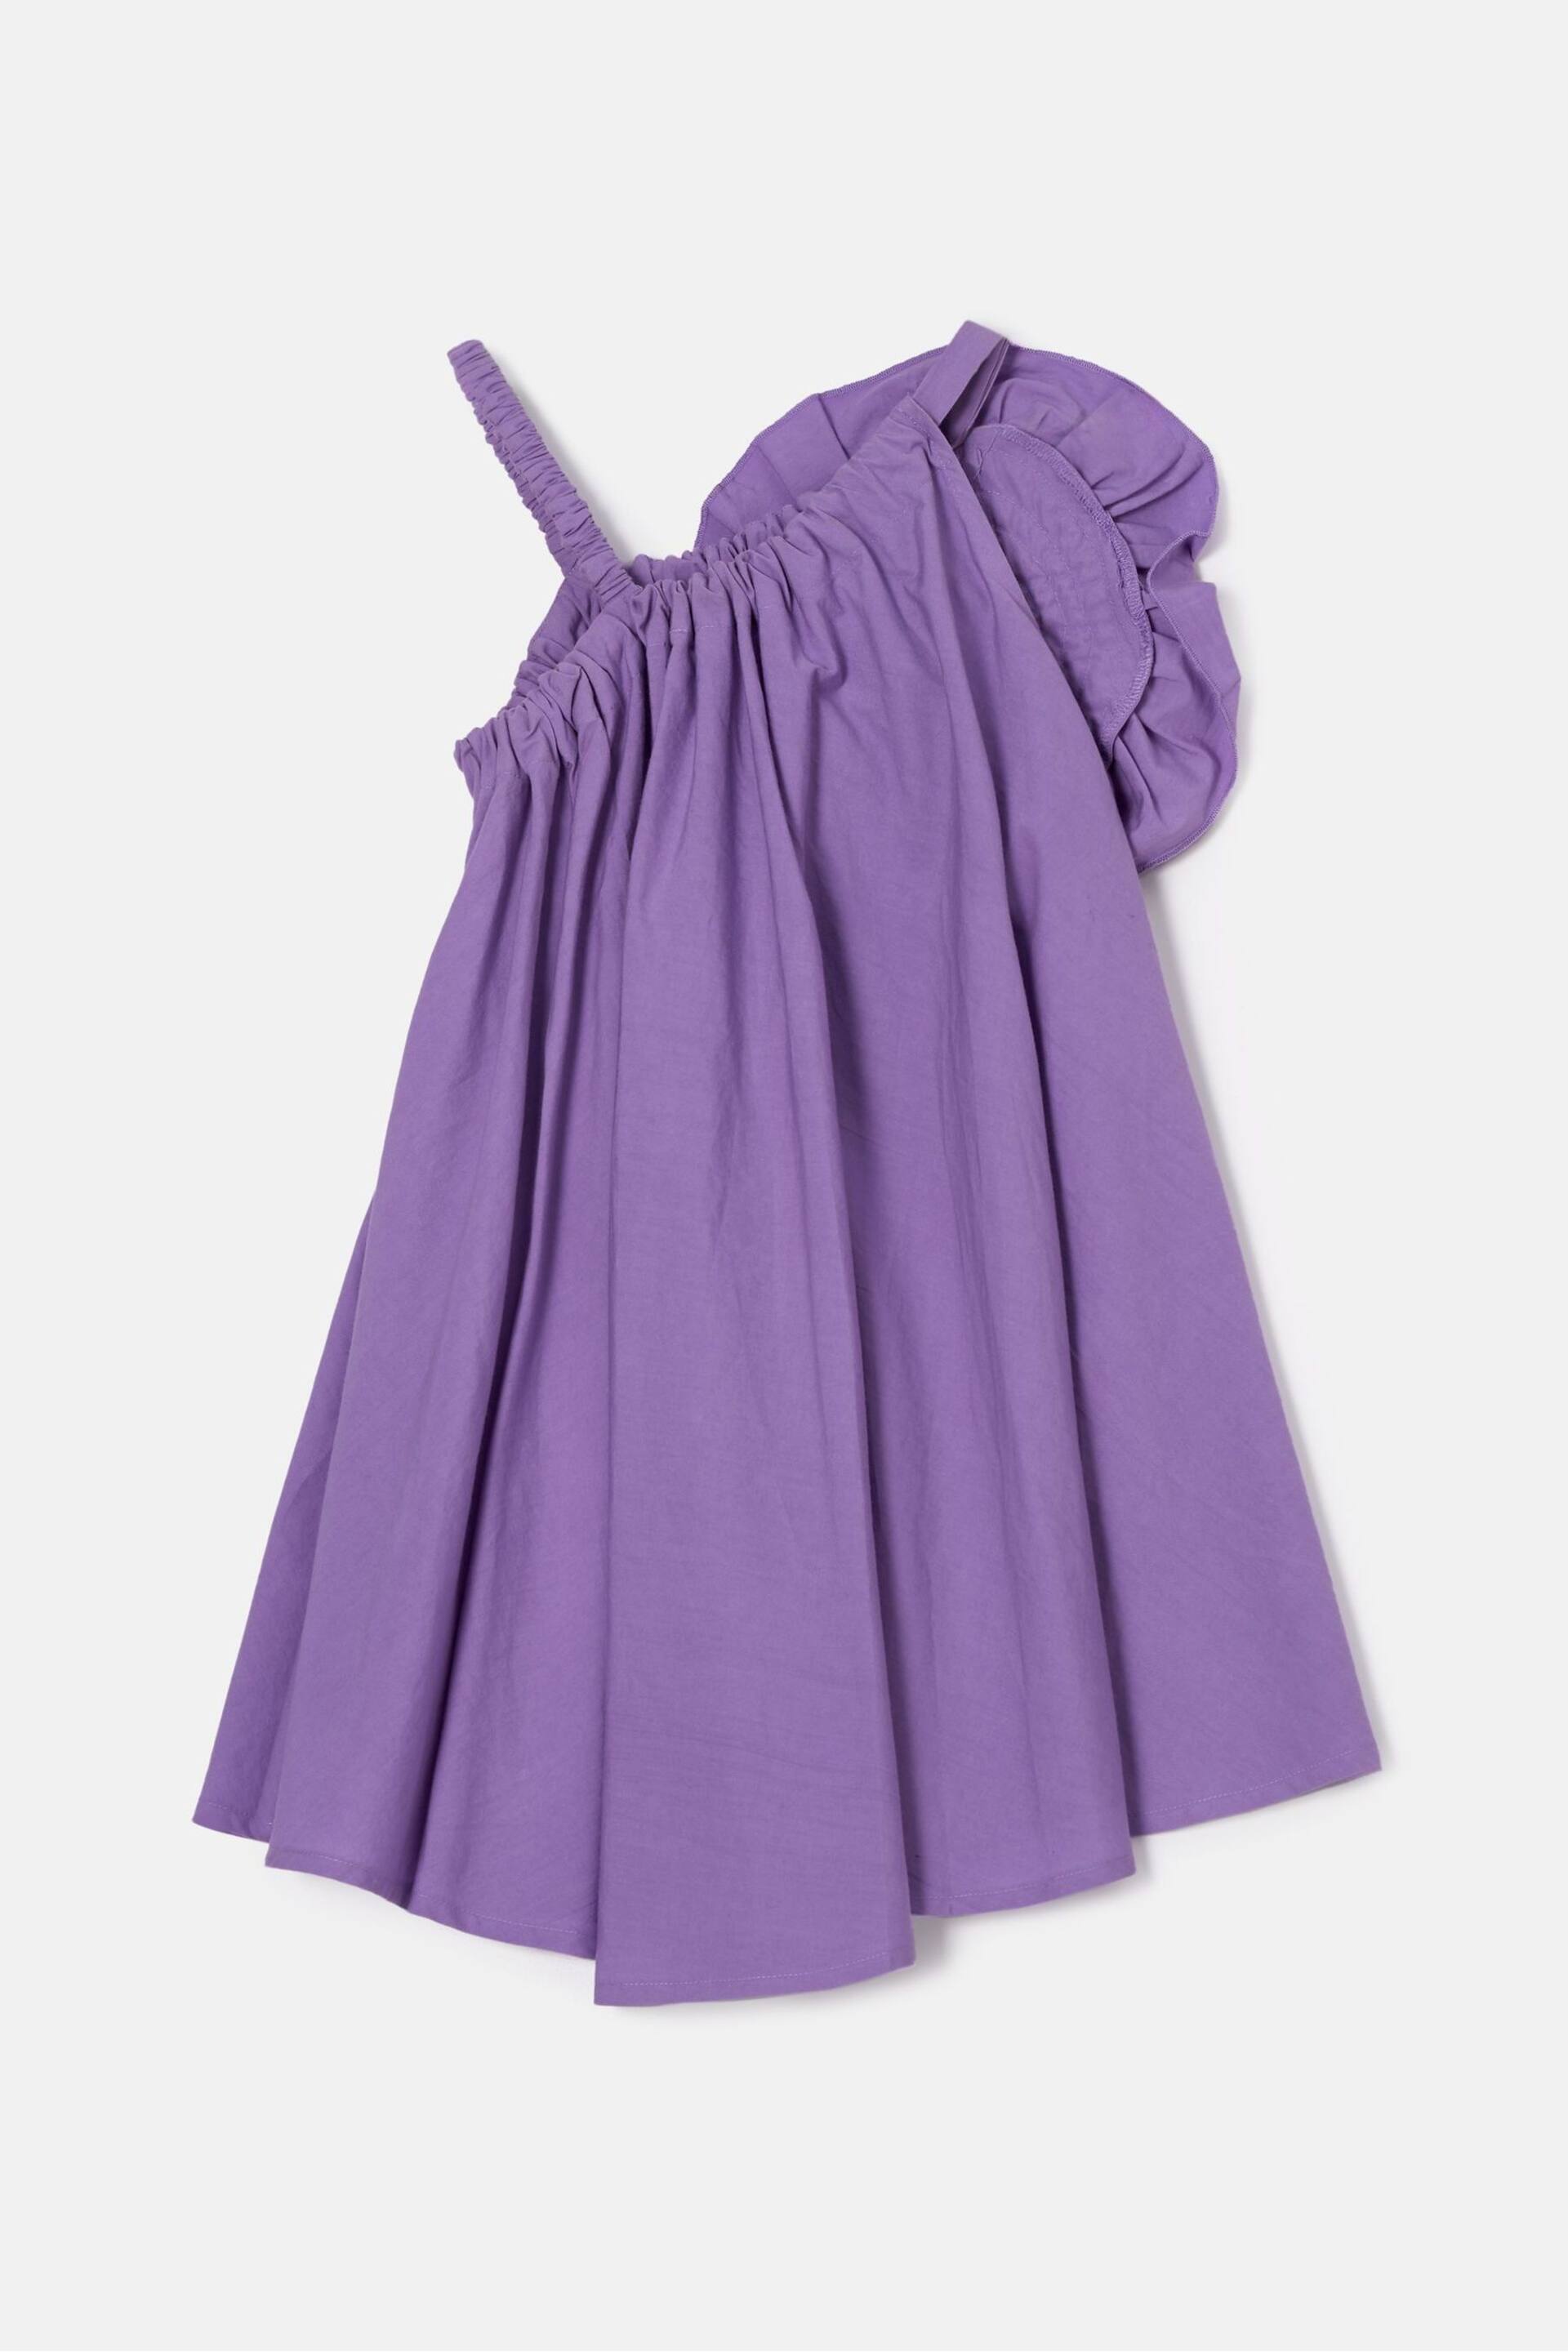 Angel & Rocket Purple Carrie Corsage Swing Dress - Image 5 of 6